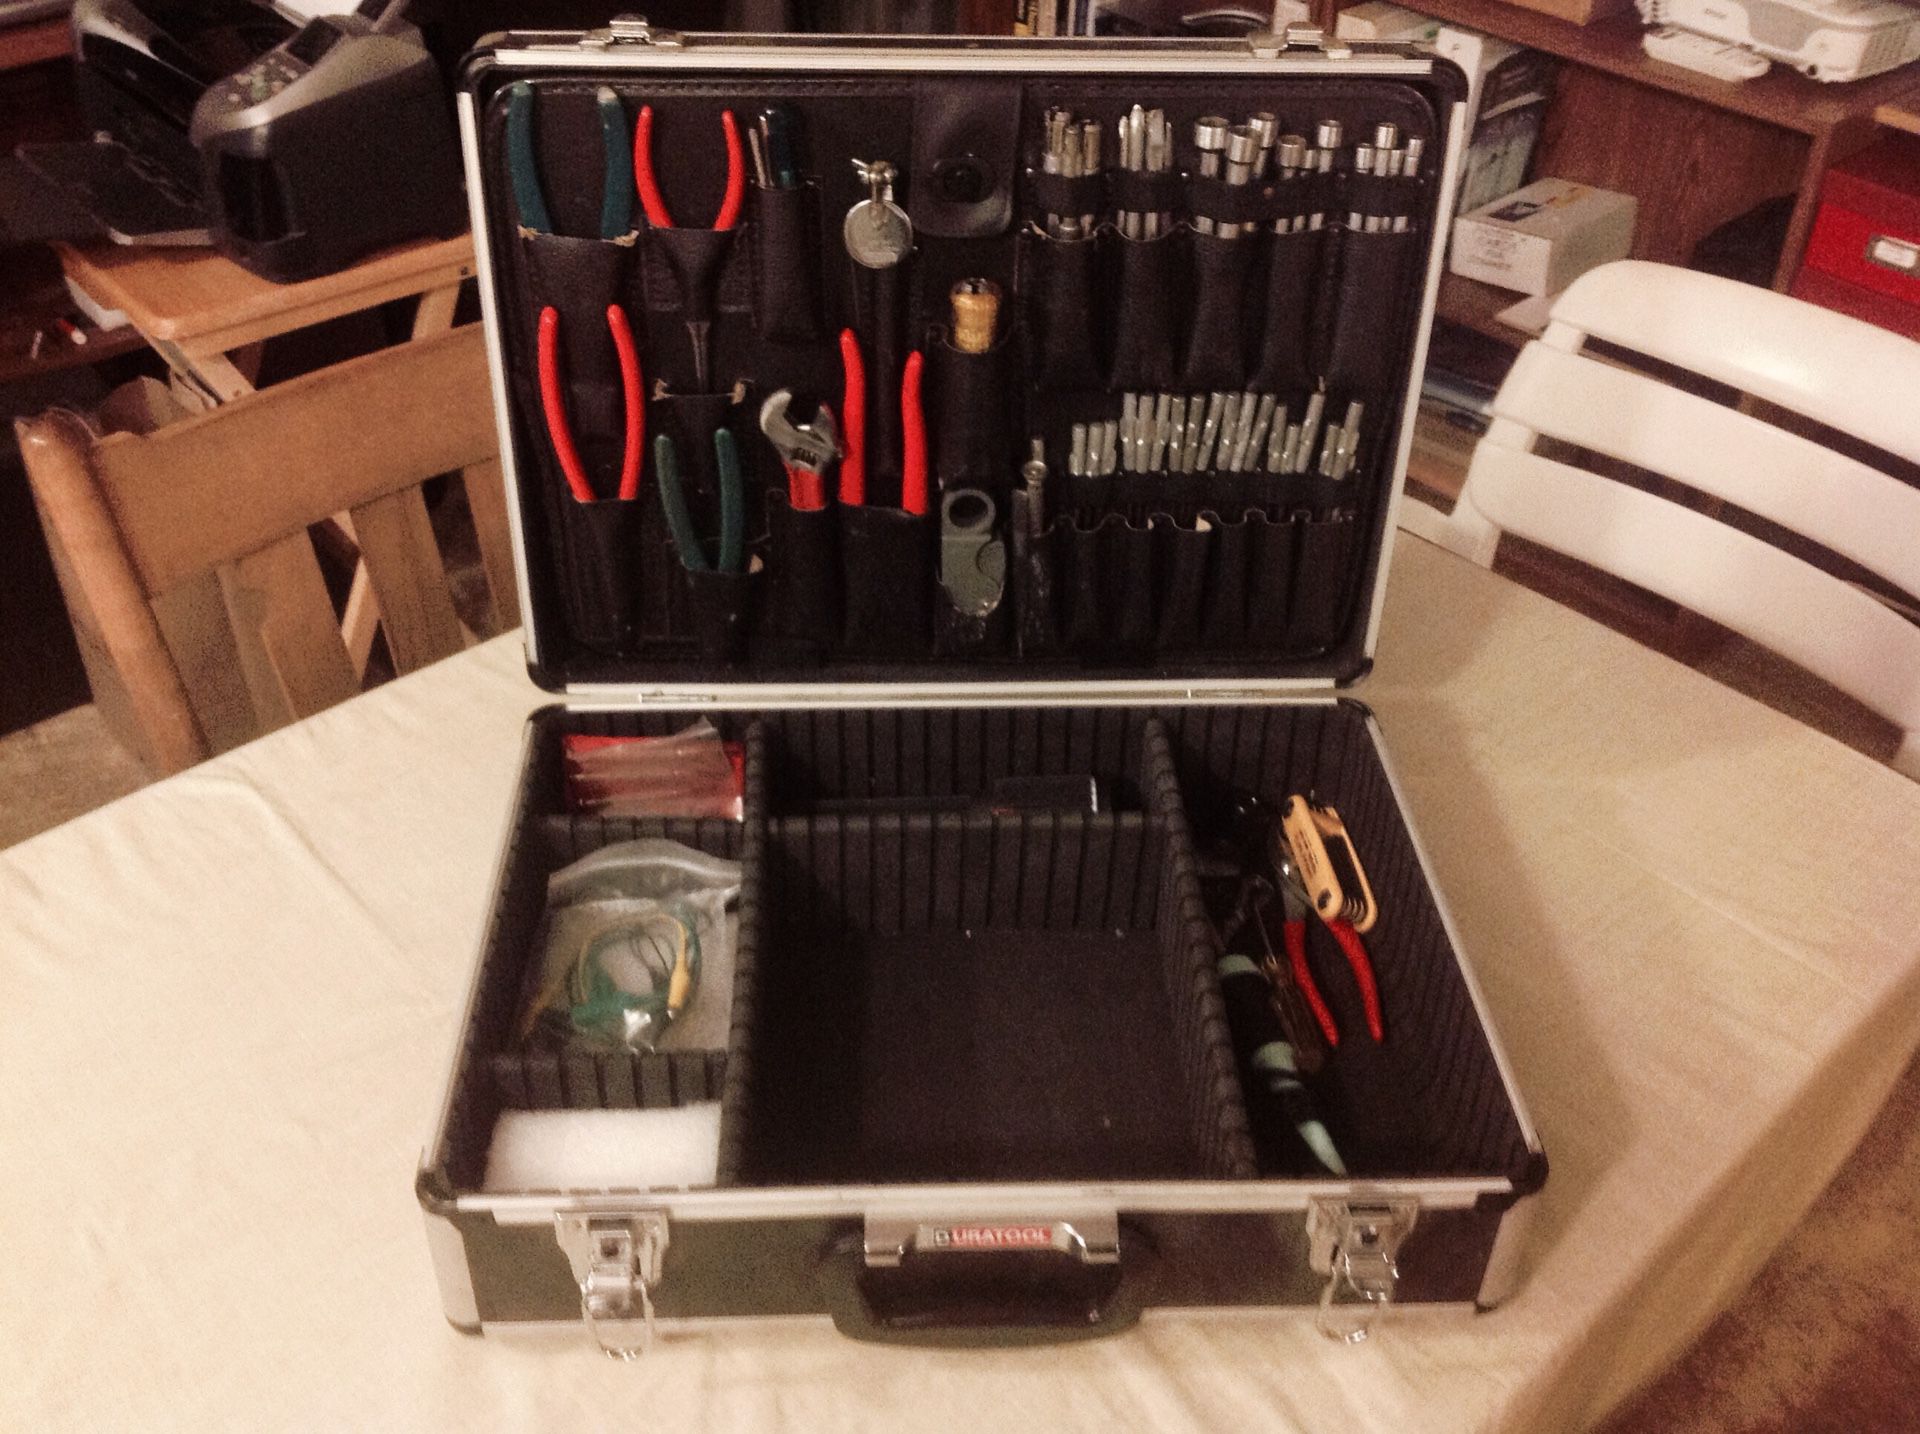 Aluminum tool case with tools